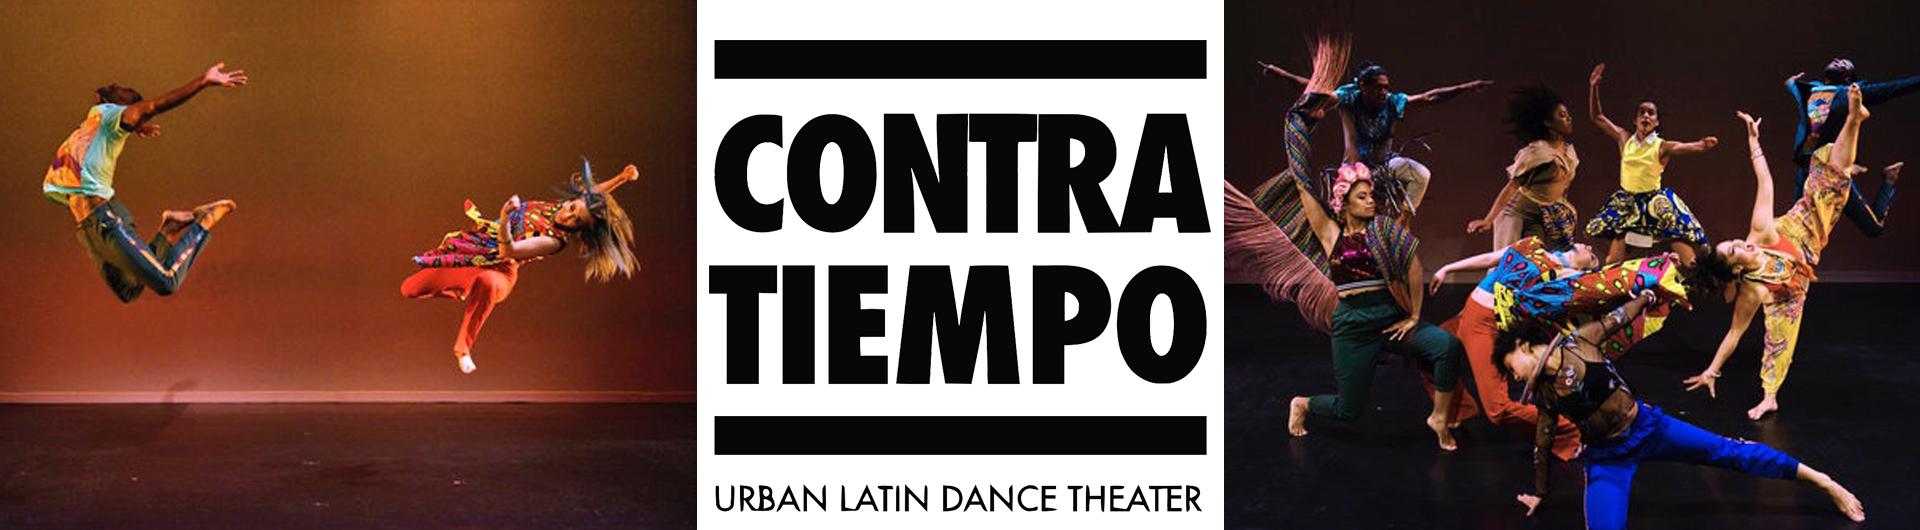 Contra Tiempo Urban Dance Theater dancers performing